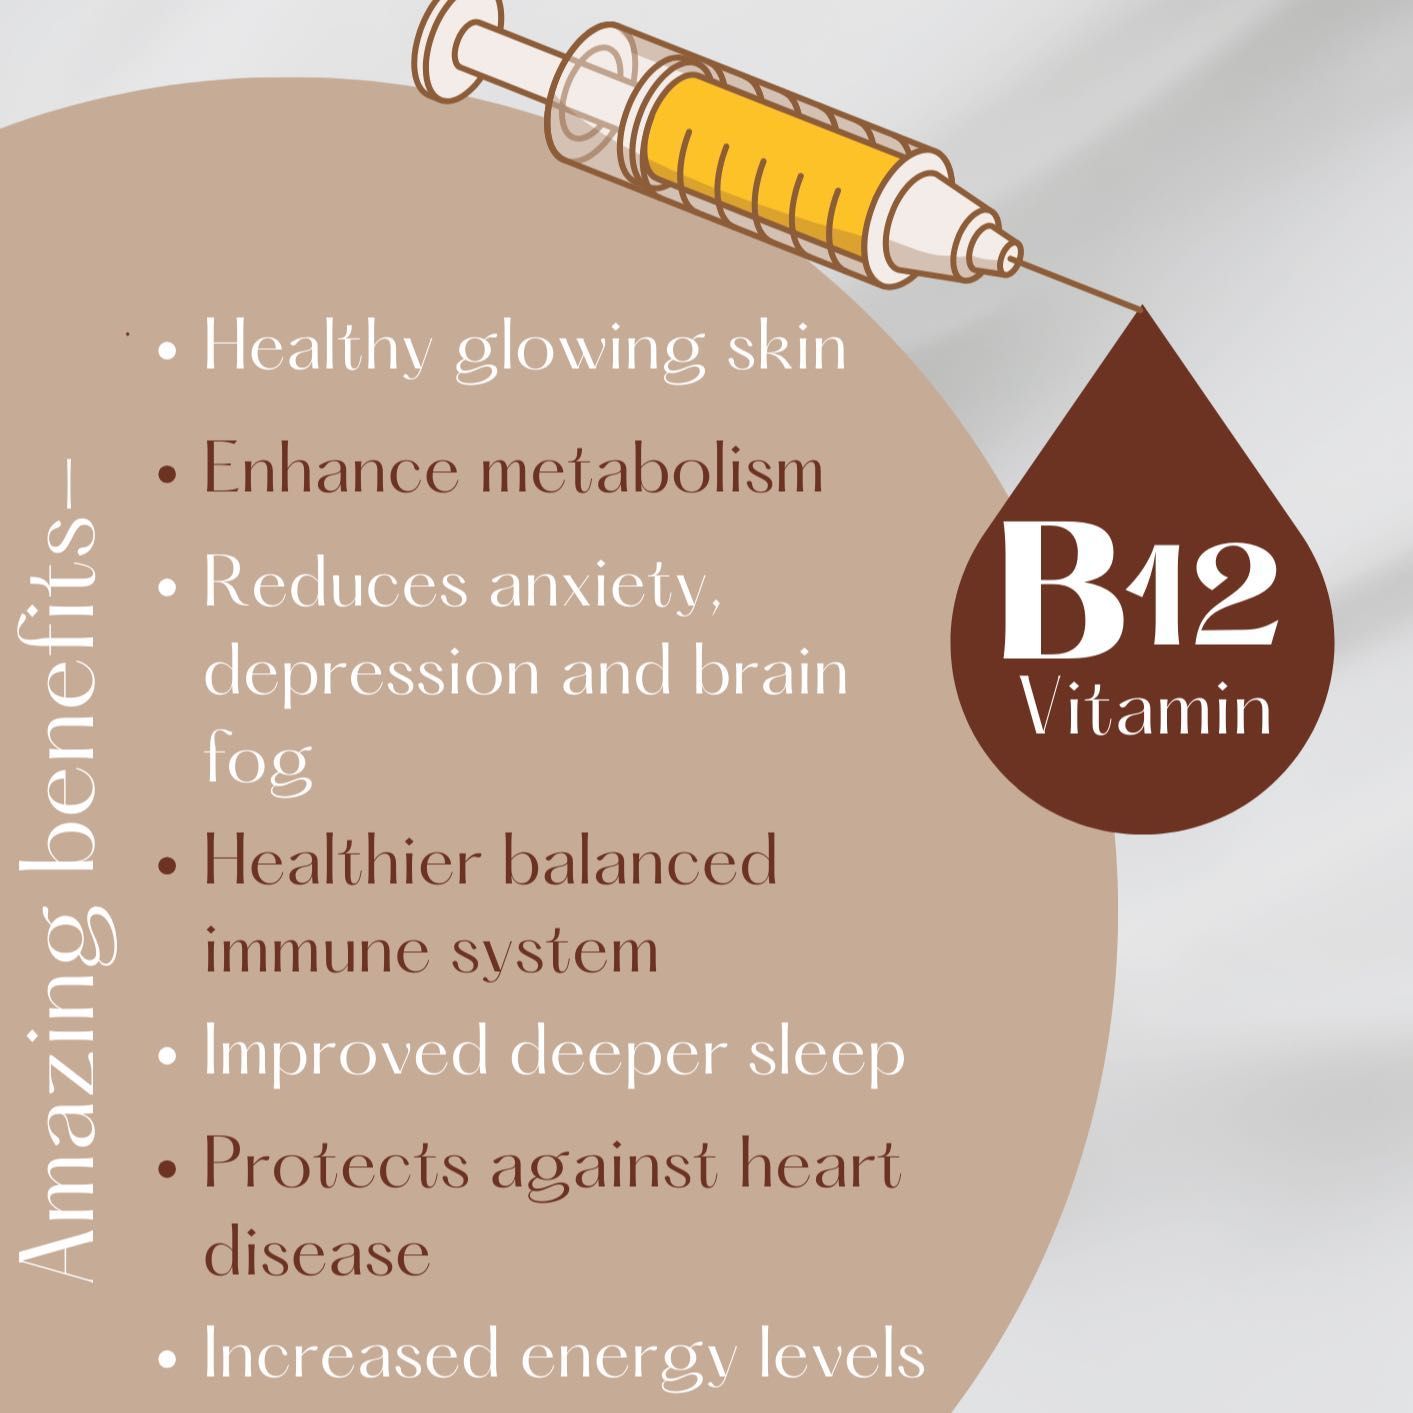 Vitamin B12 injection portfolio